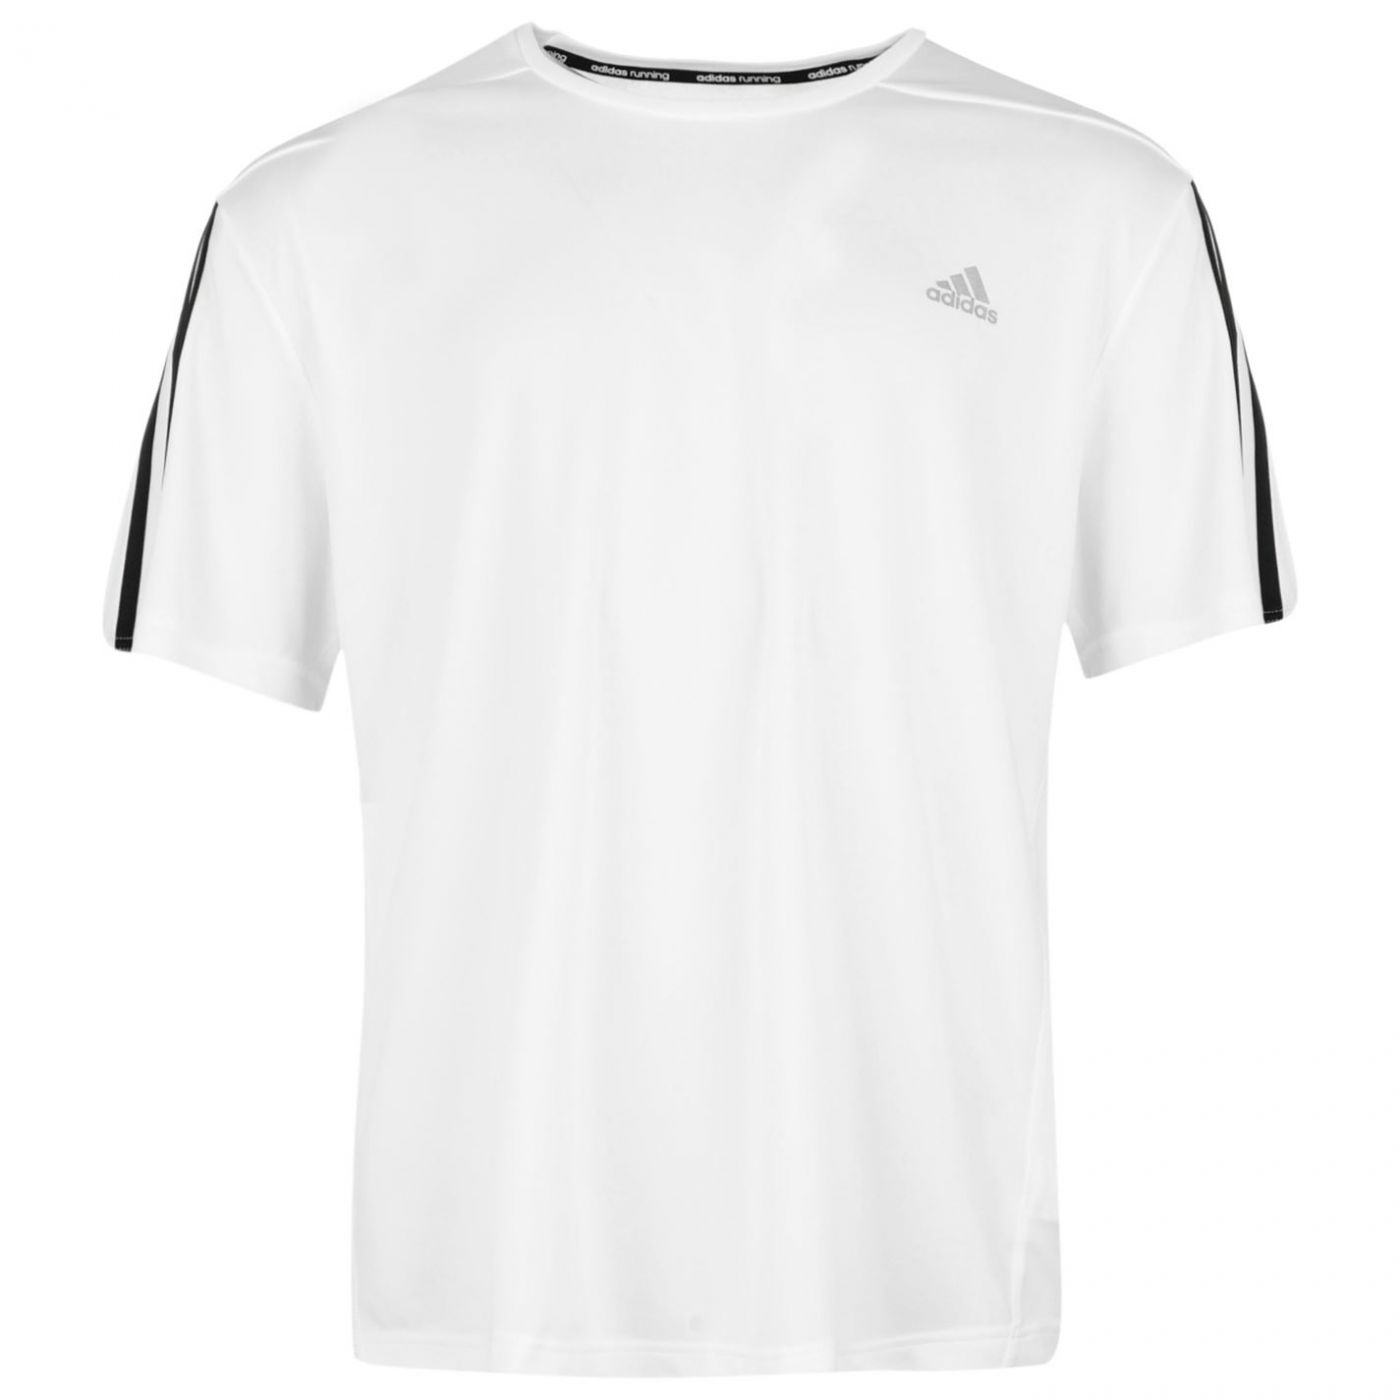 Adidas Questar T Shirt Mens